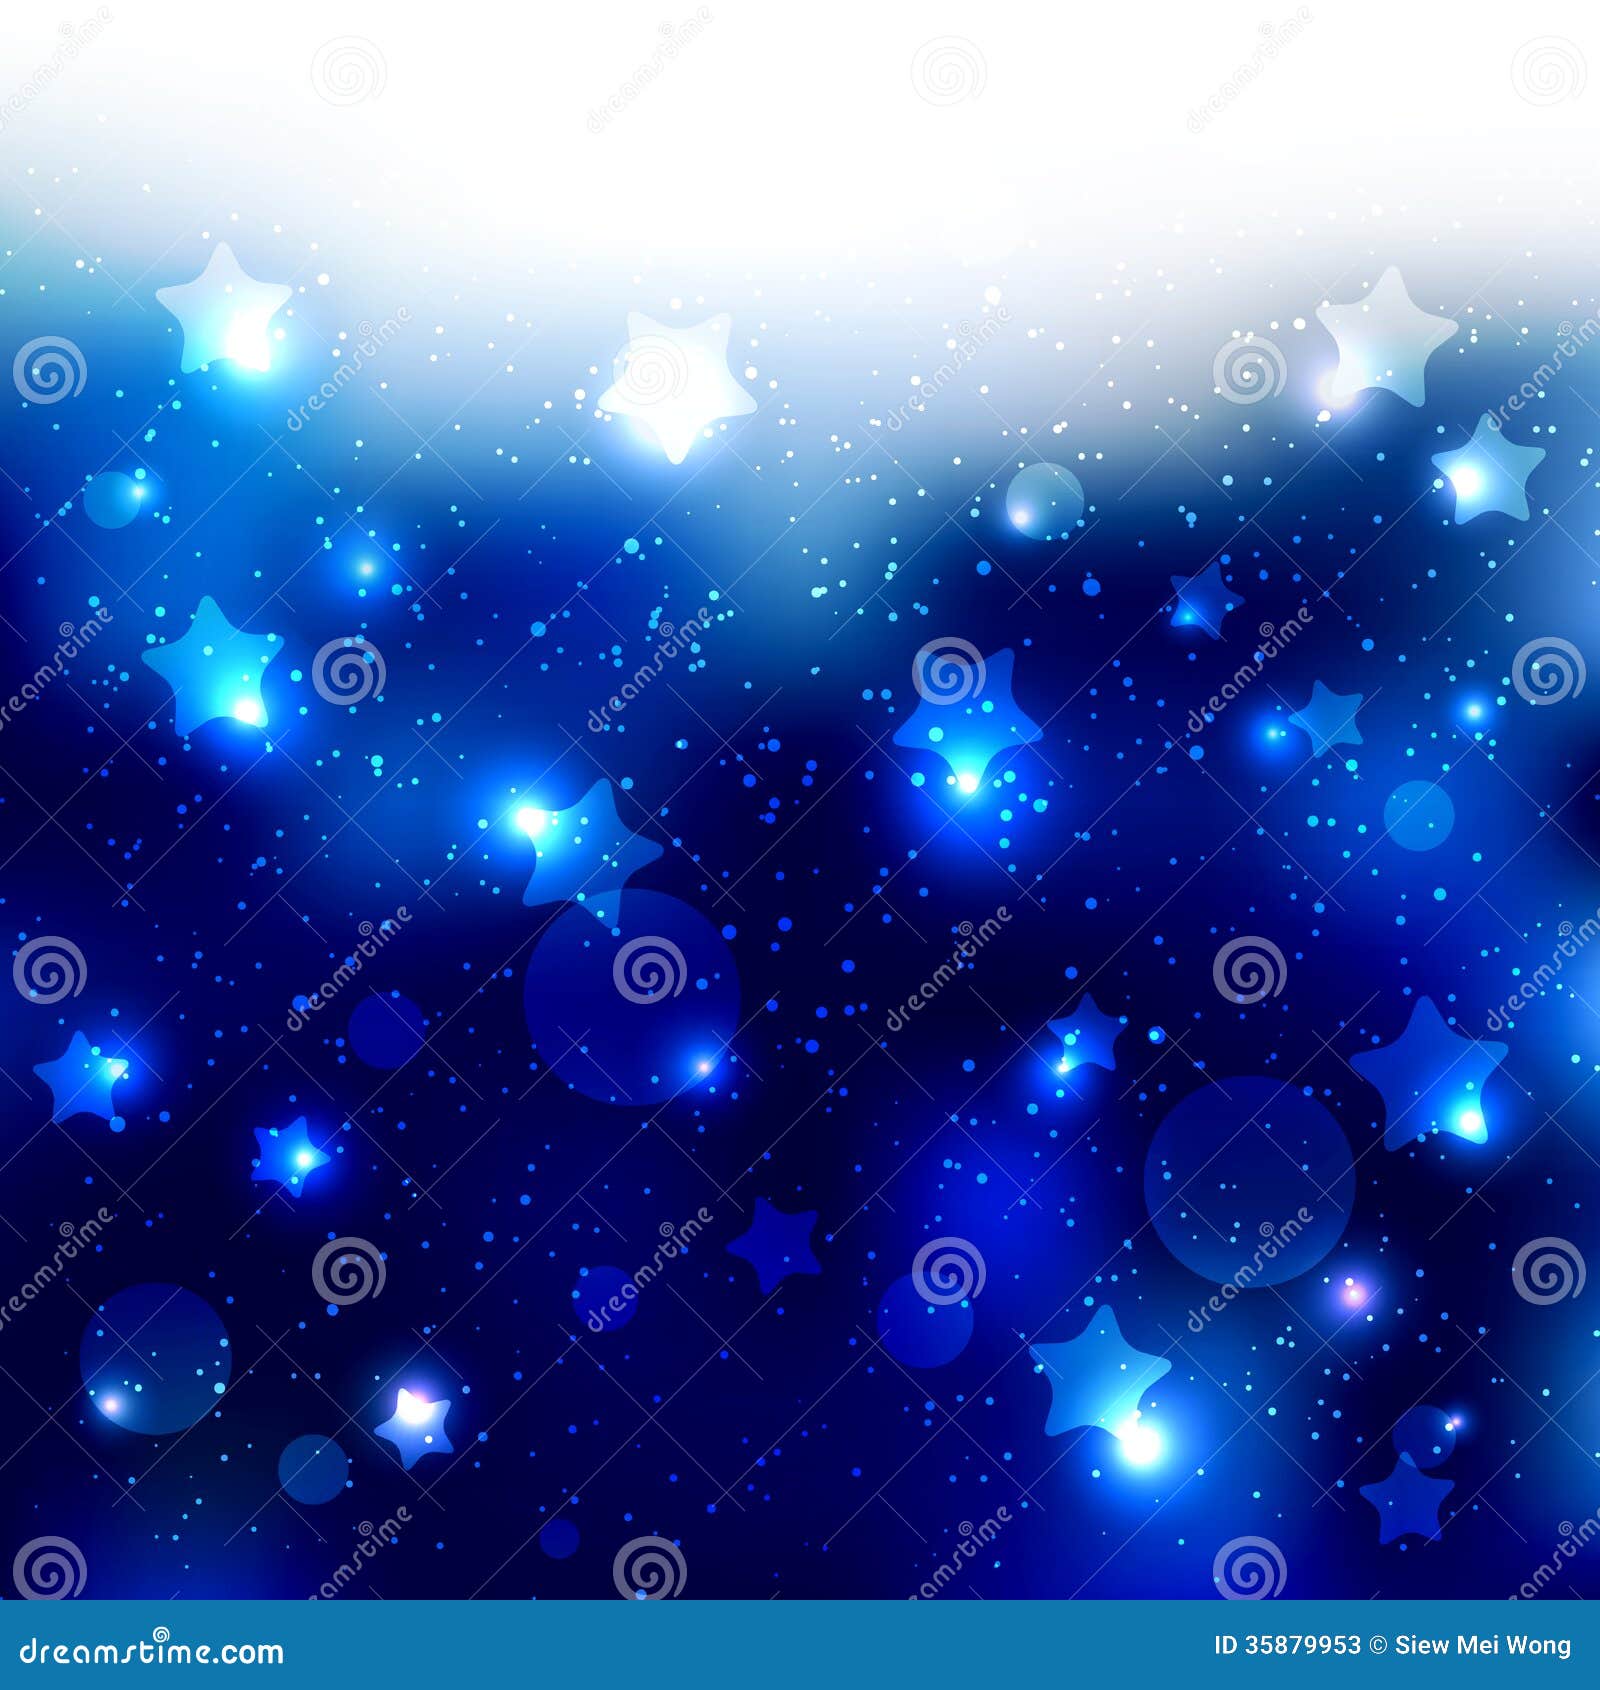 3400 Light Blue Background With Stars Illustrations RoyaltyFree Vector  Graphics  Clip Art  iStock